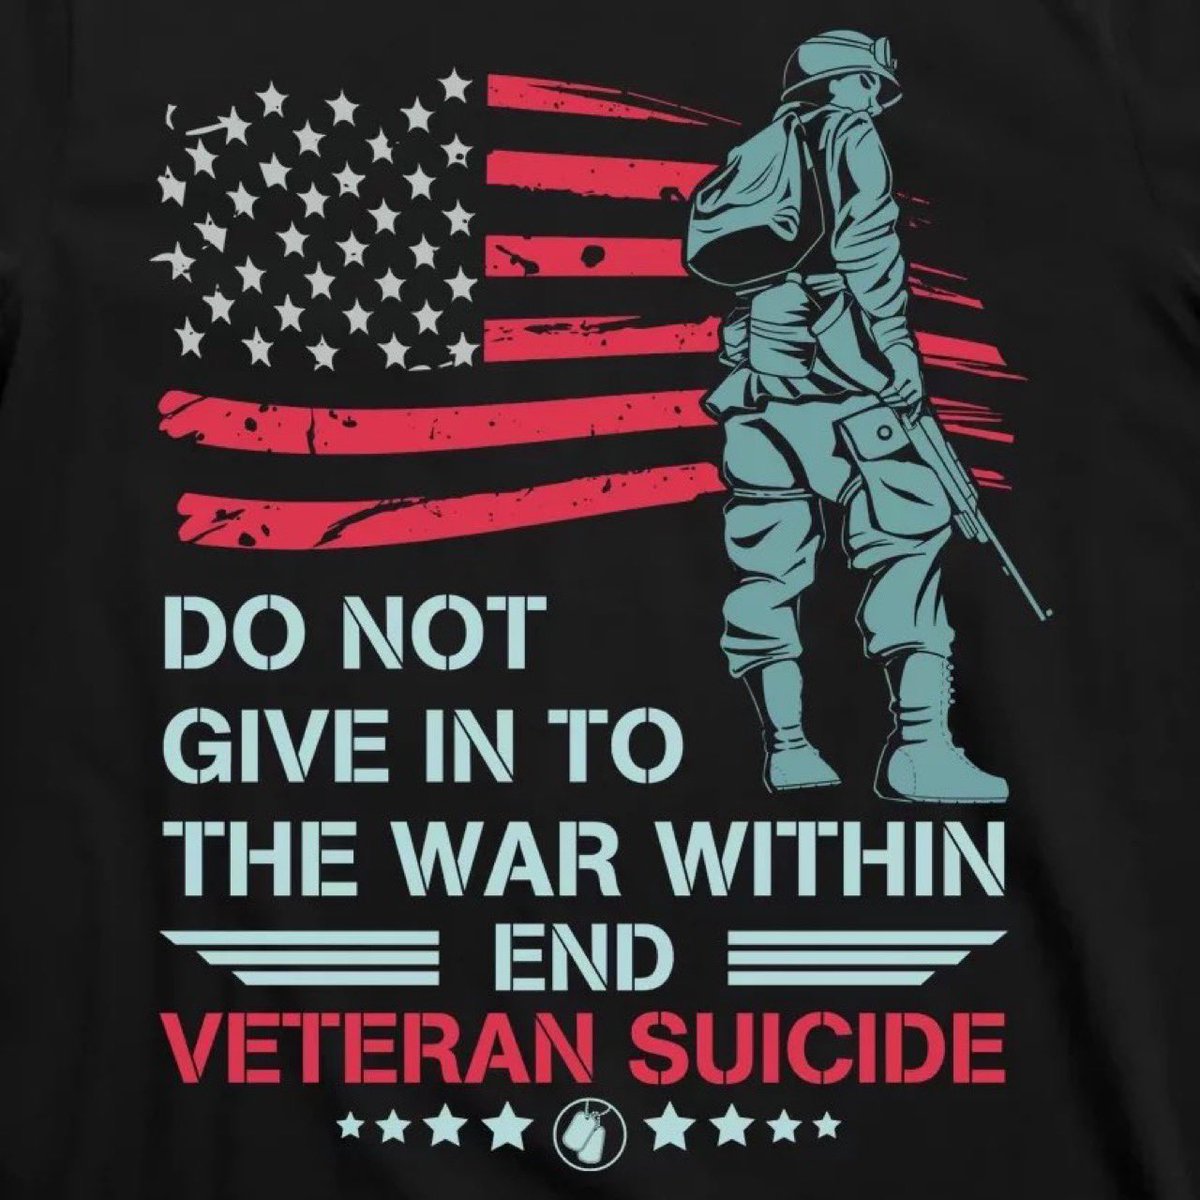 #EndVeteranSuicideSaturday #BuddyChecksMatter #BuddyChecks with #Veterans #BuddyCheckers👇#turn22to0 
🇺🇸@Snoexception1 @NelisonDarin @BTWelder @941Rickster⭐️
🇺🇸@draven66791 @reeldonzi @FawnMacMT @DPatrioticvet⭐️
🇺🇸@BobWill38725787 @RogerMcghee6 @WooPig83⭐️
🇺🇸@waynel1964 @AultGt⭐️